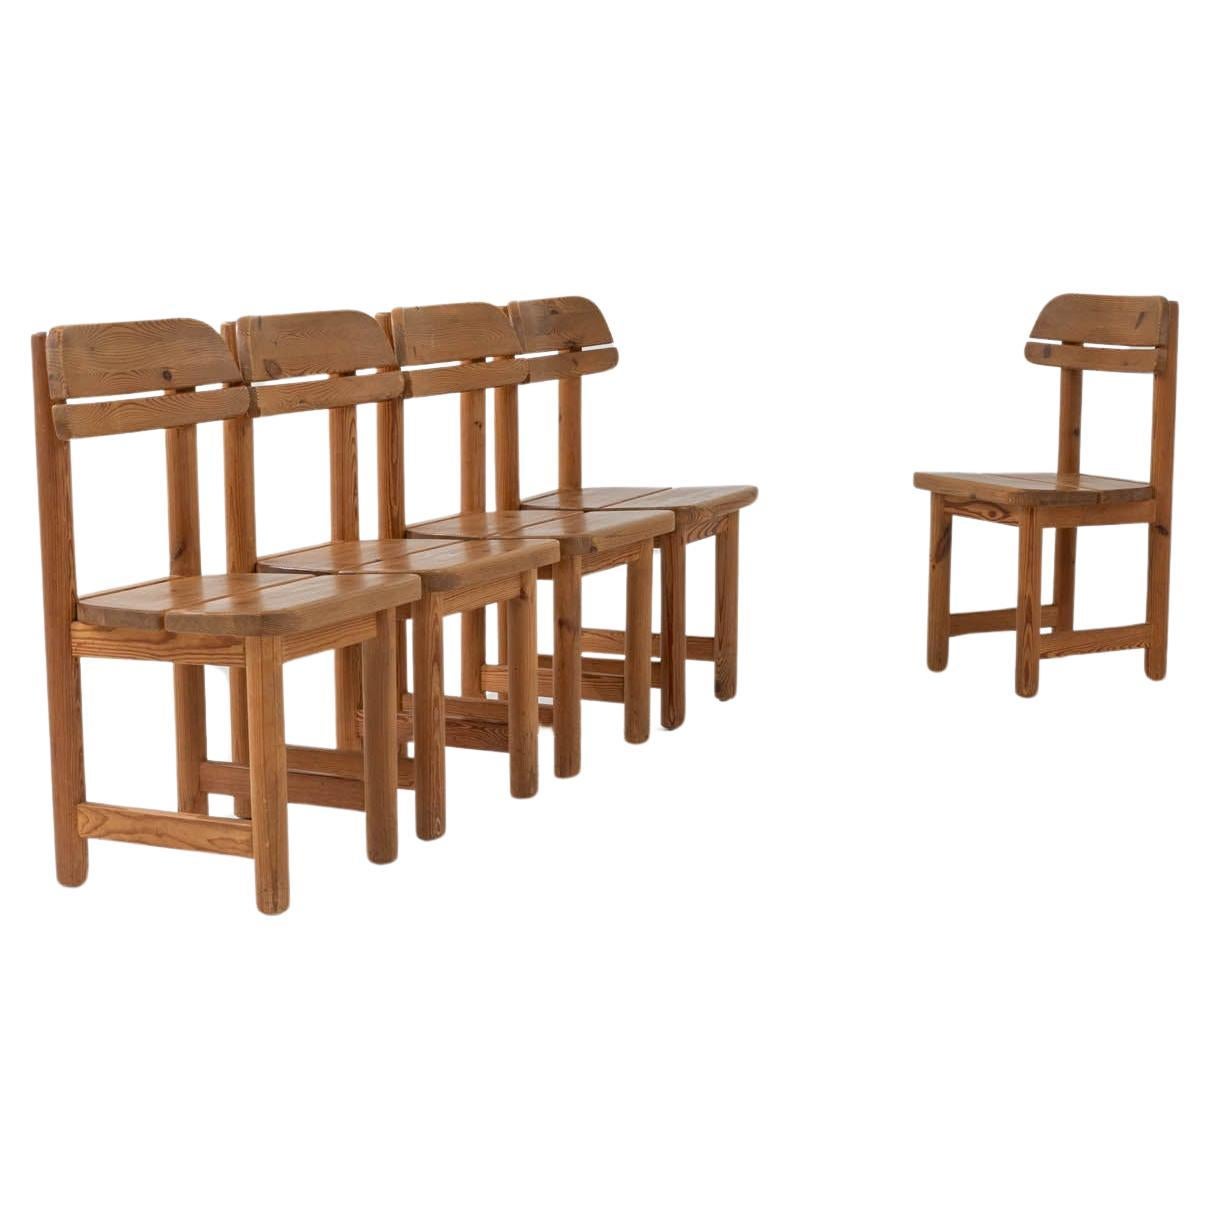 Twentieth Century Danish Wooden Dining Chairs, Set of Five